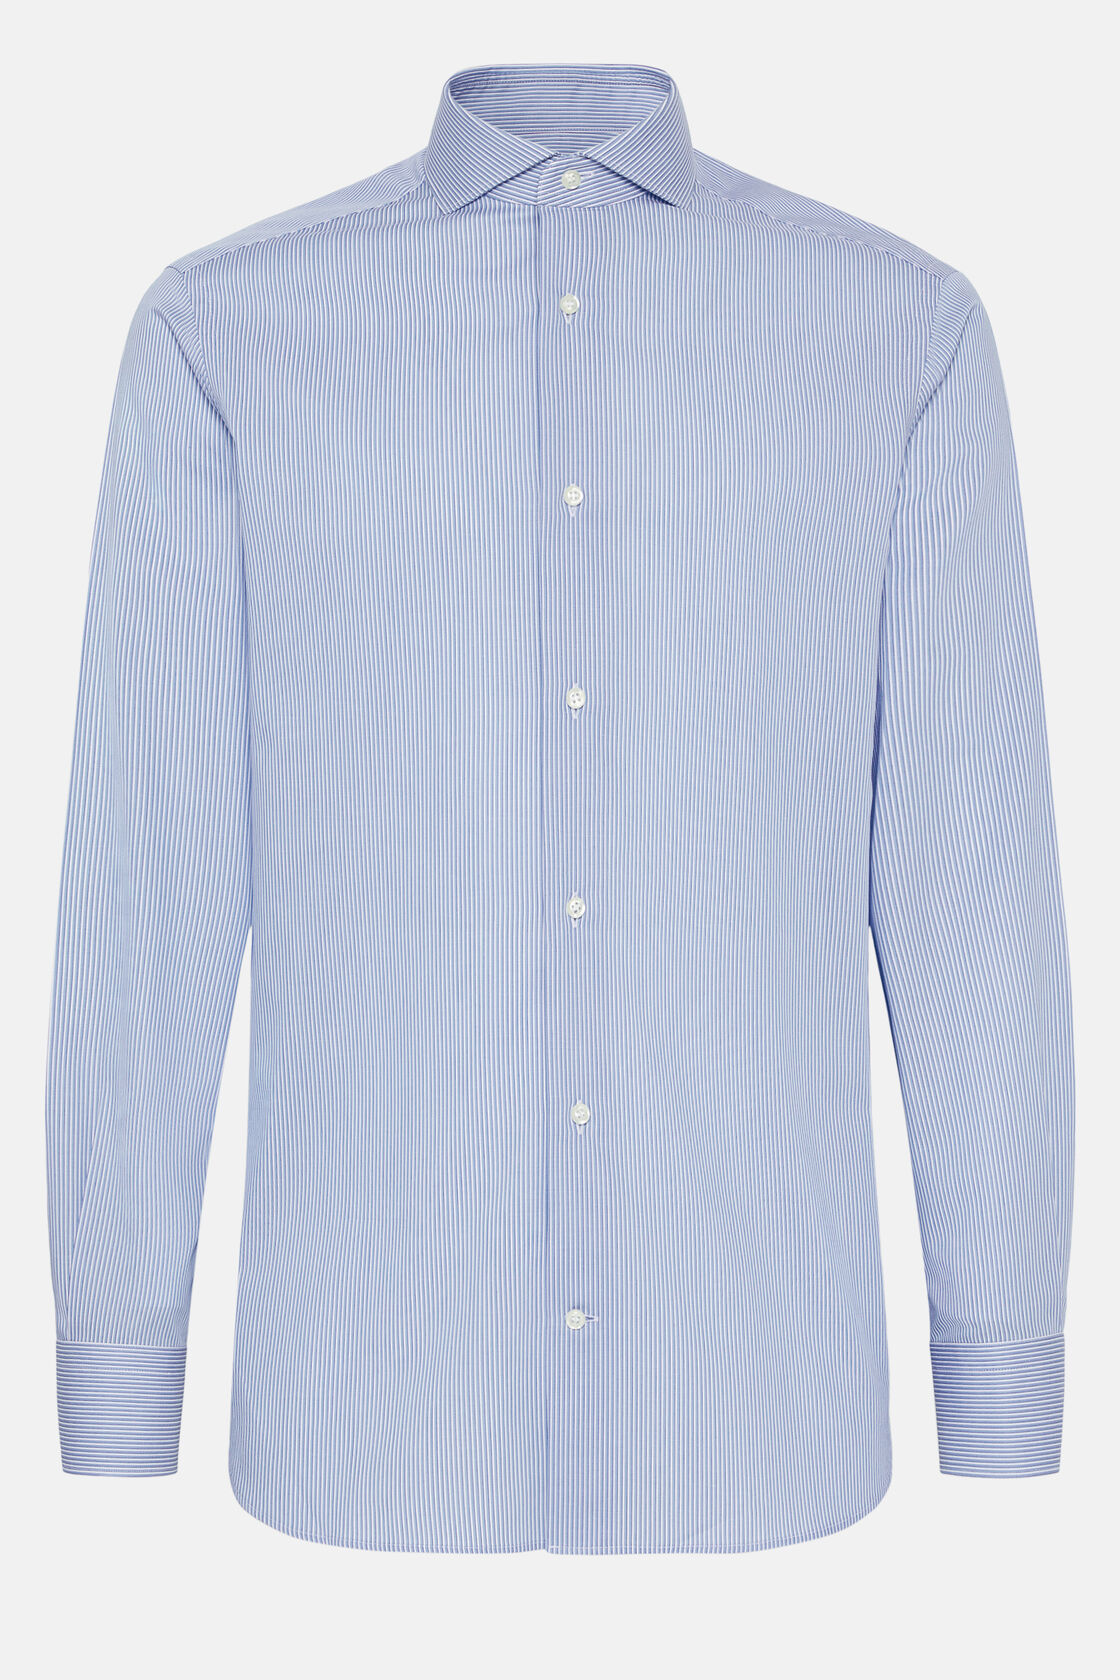 Slim Fit Sky Blue Dobby Cotton Shirt, Medium Blue, hi-res